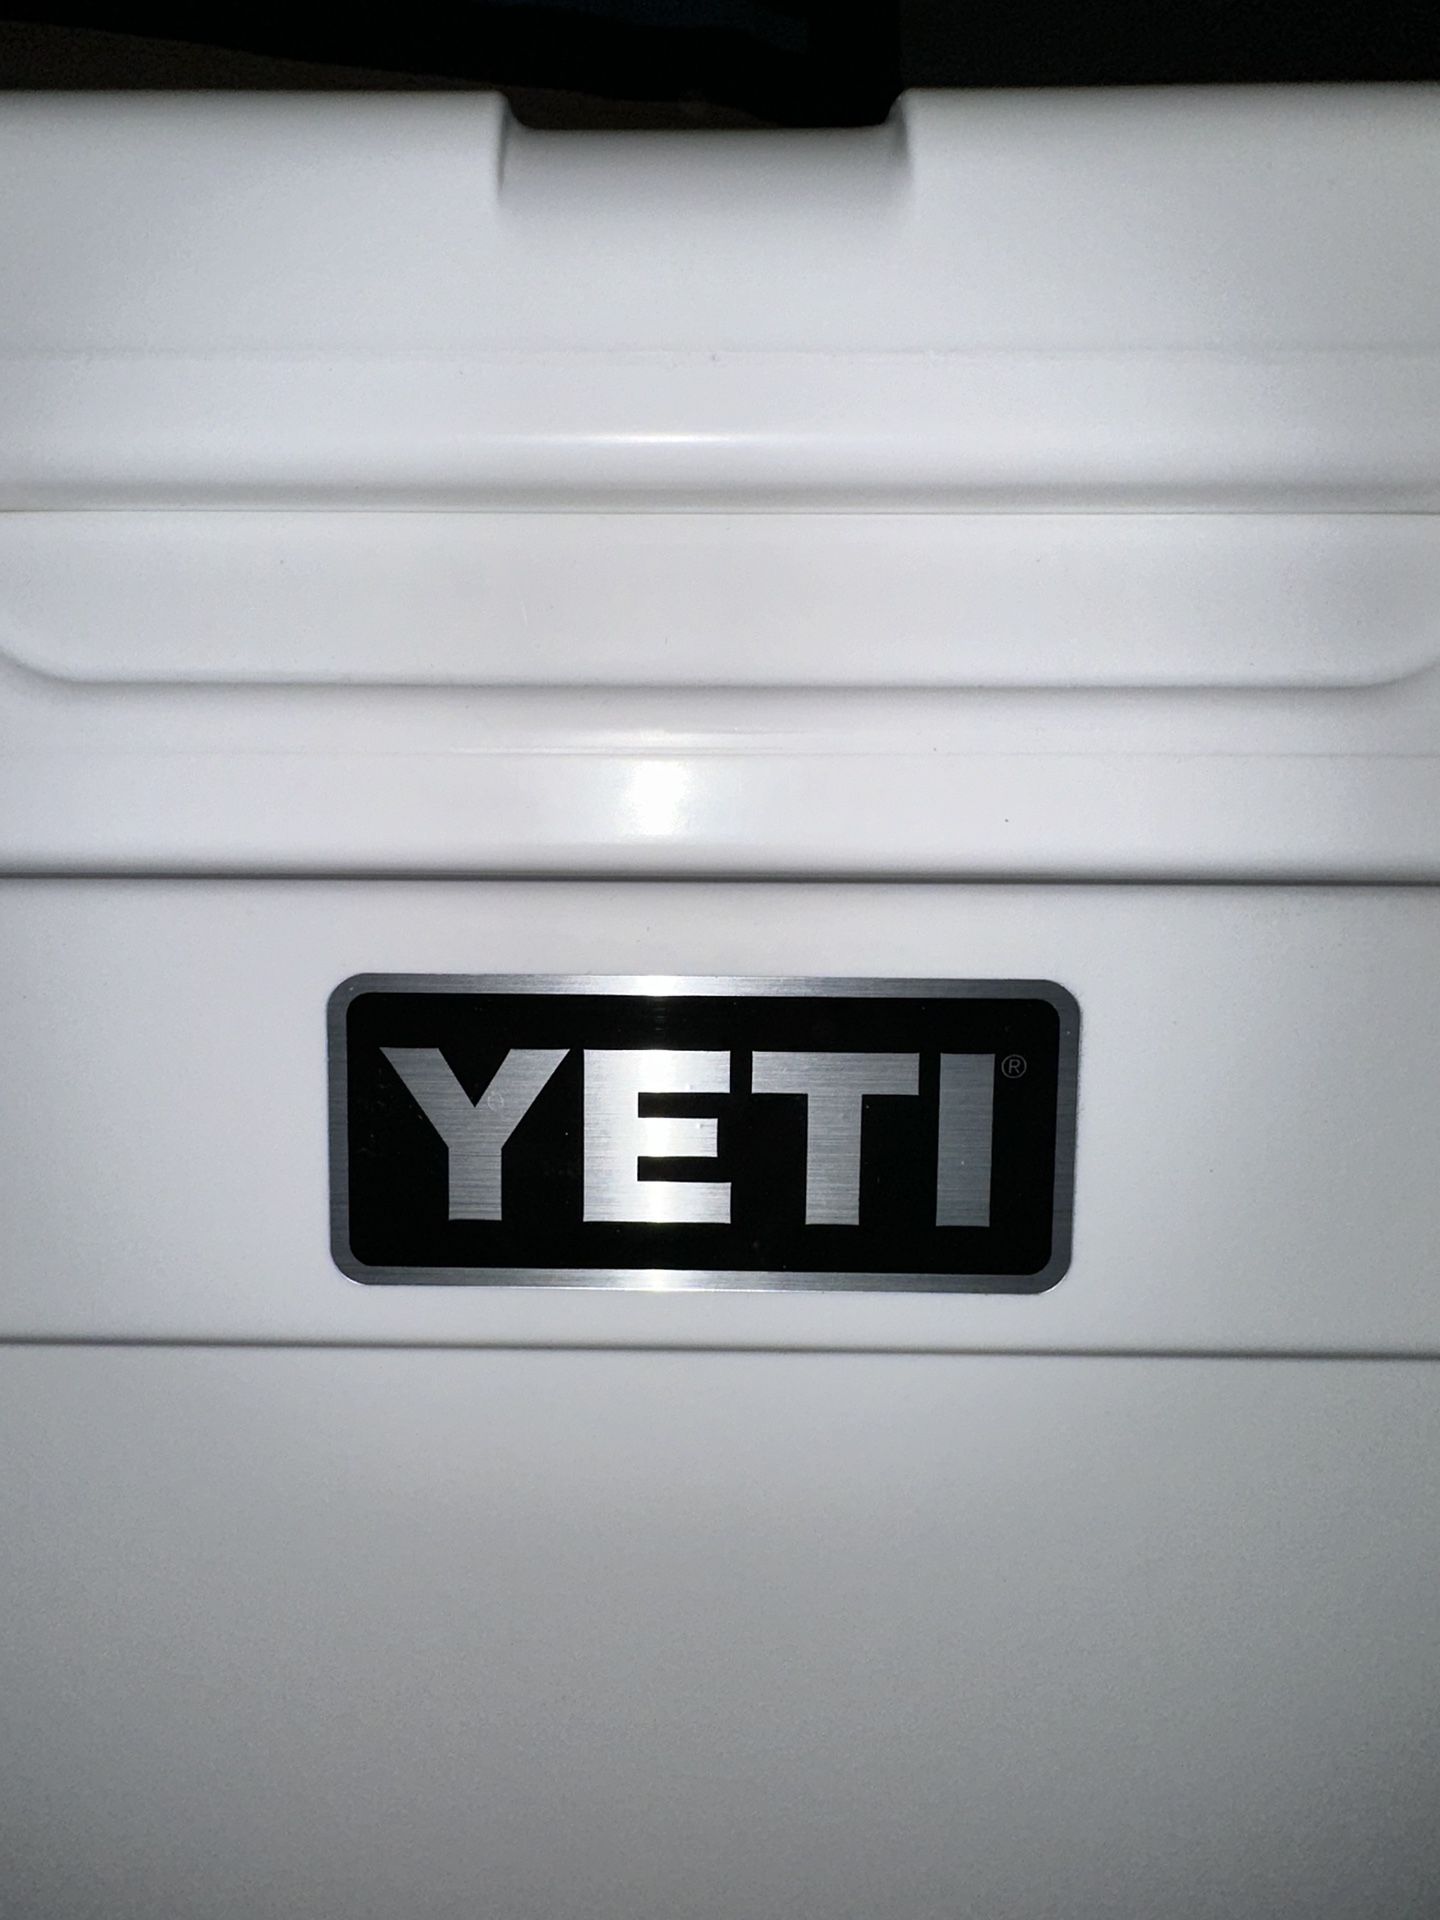 YETI Cooler (NEW)  $300 OBO